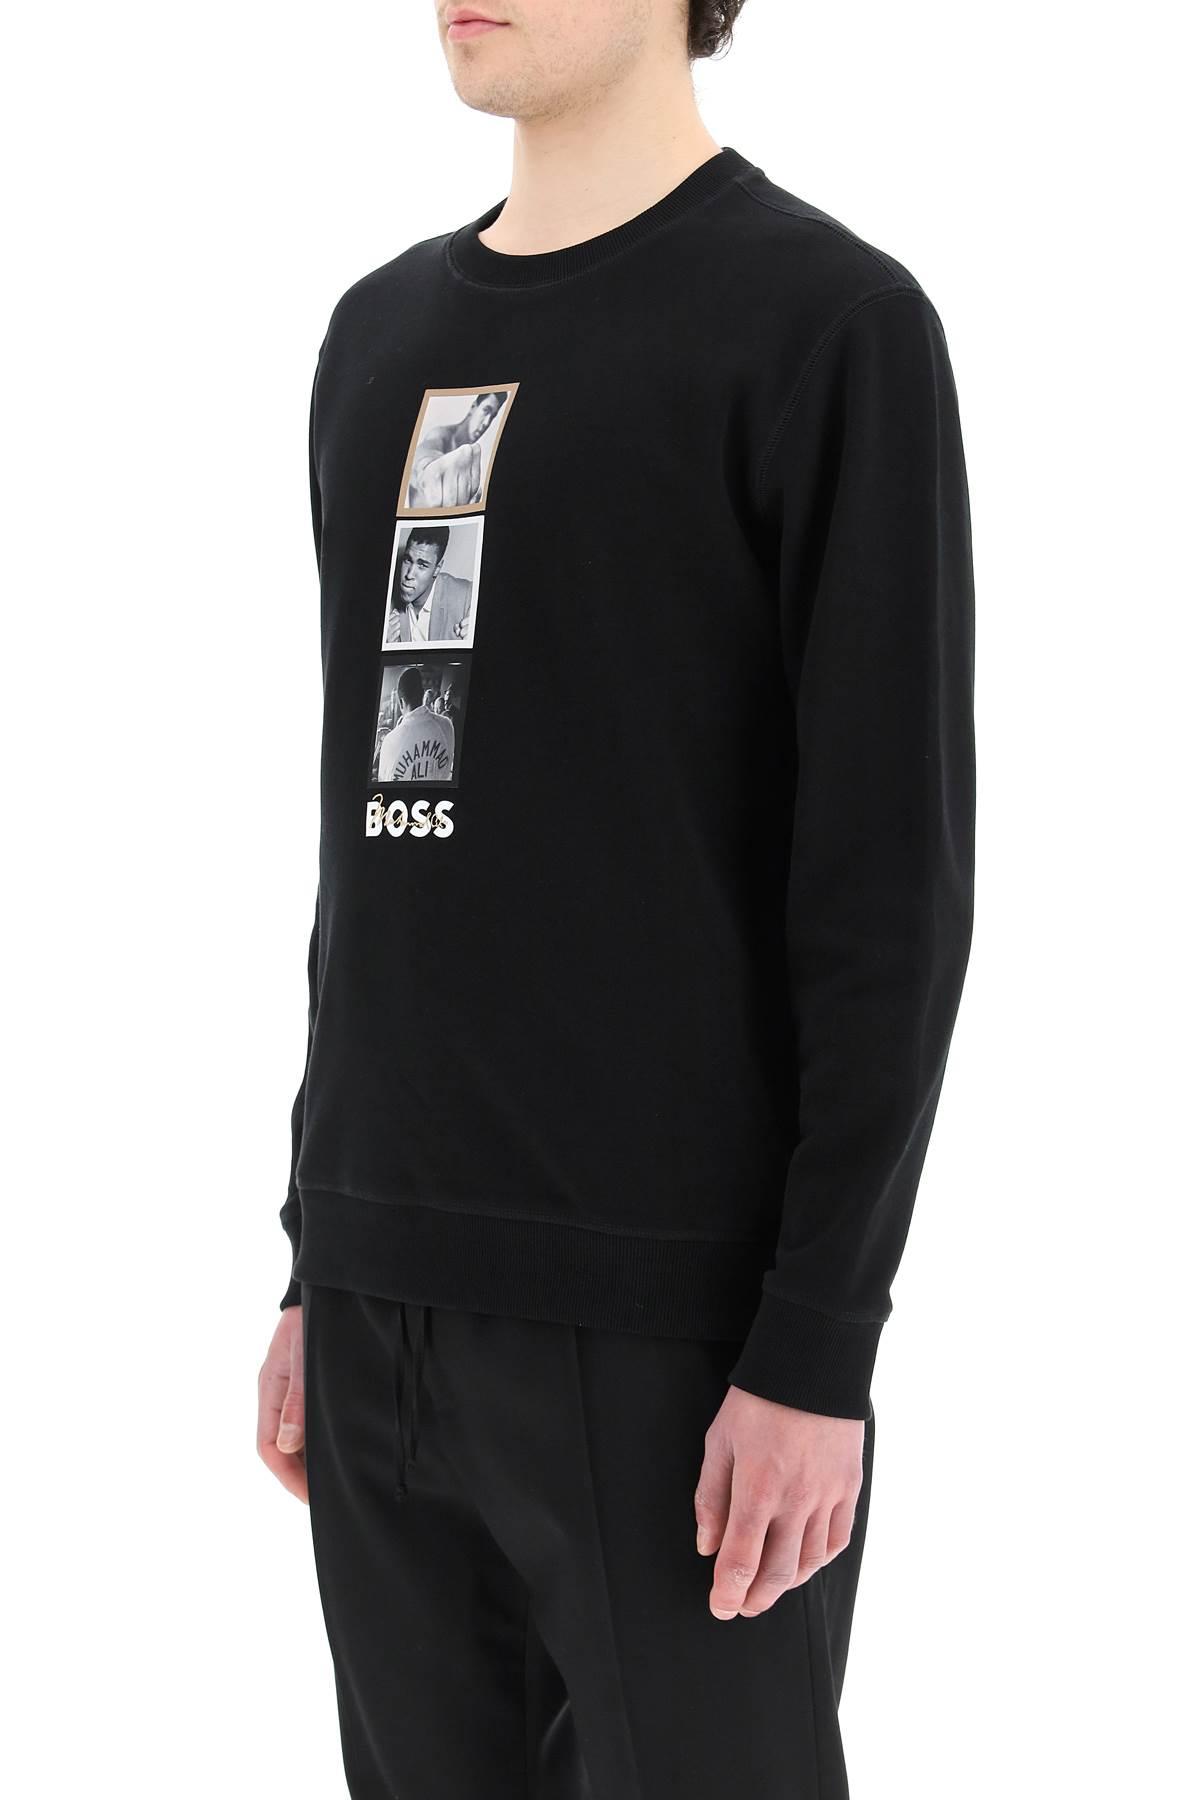 BOSS by HUGO BOSS Muhammad Ali Print Crew Neck Sweatshirt in Black for Men  | Lyst